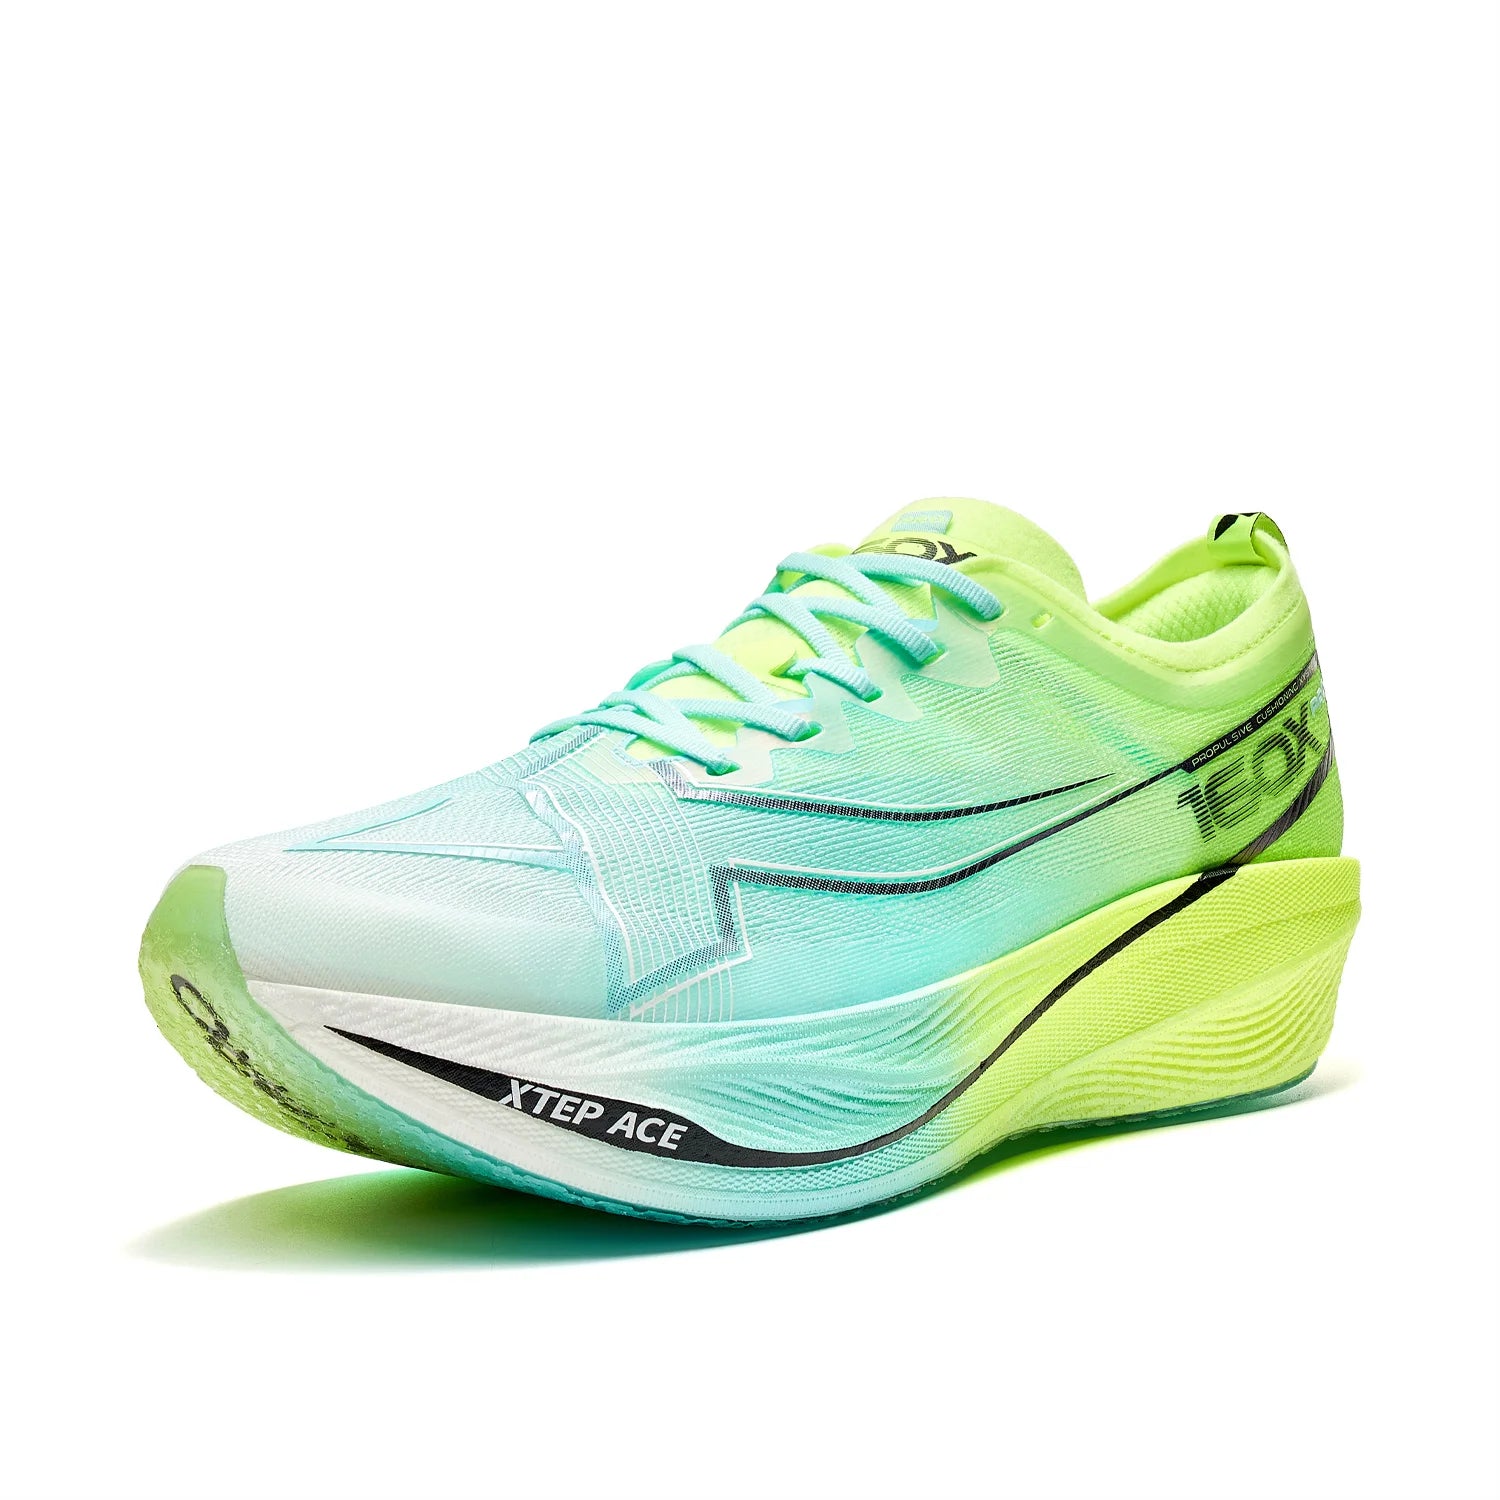 160X 5.0 Pro Running Shoes Men Carbon Plate Professional Marathon PB Sport Shoe Lightweight Durability Sneaker - Sellinashop